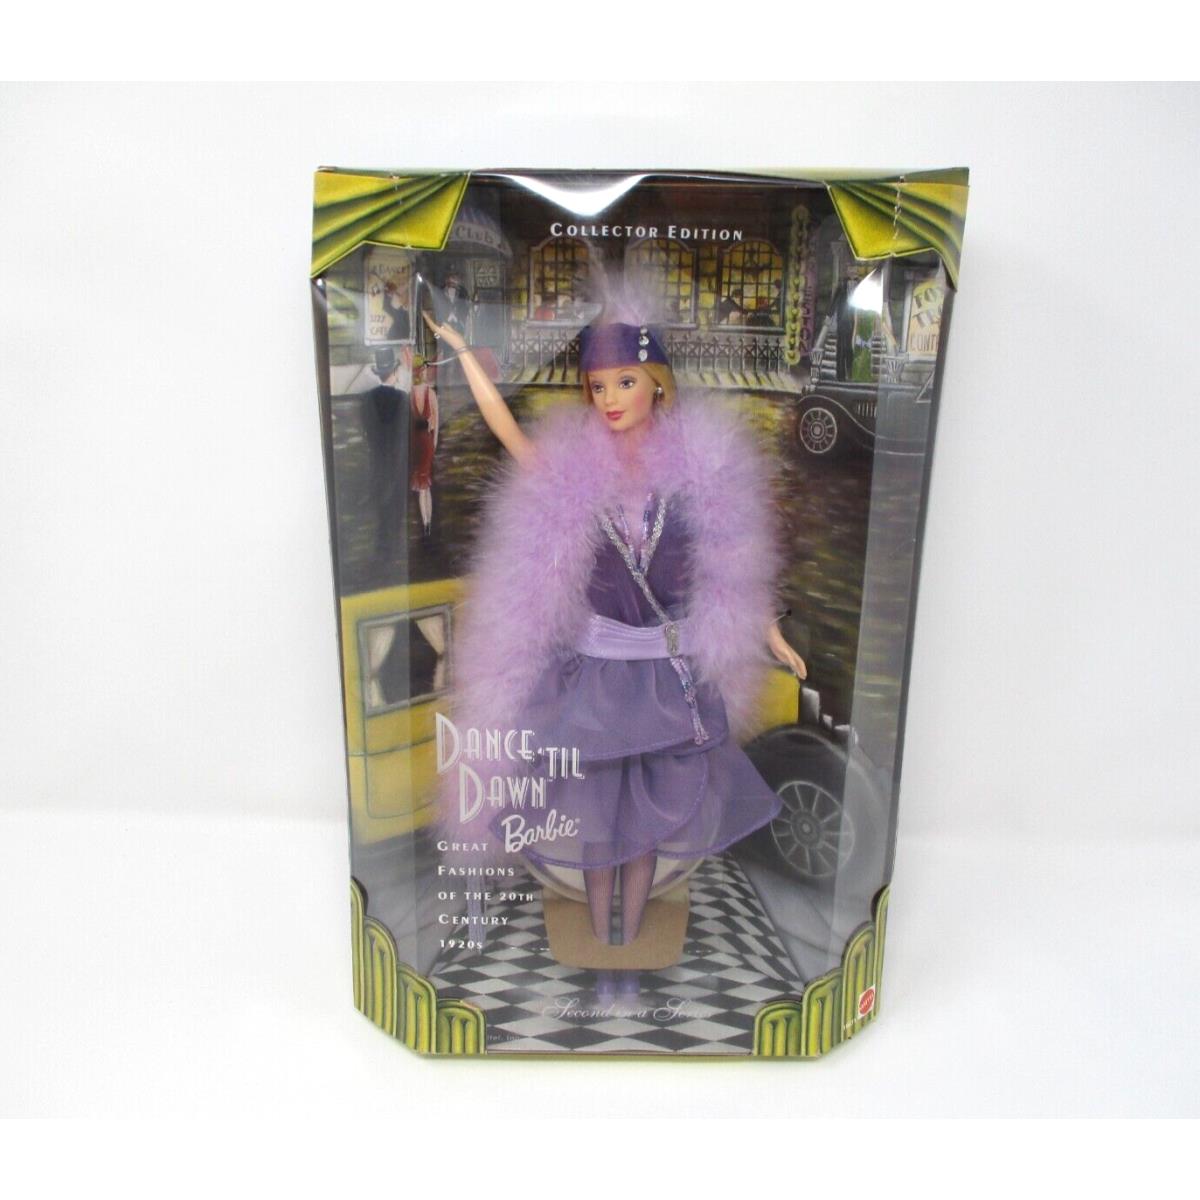 1998 Barbie Dance Till Dawn Collector Edition Nrfb 19631 Nos